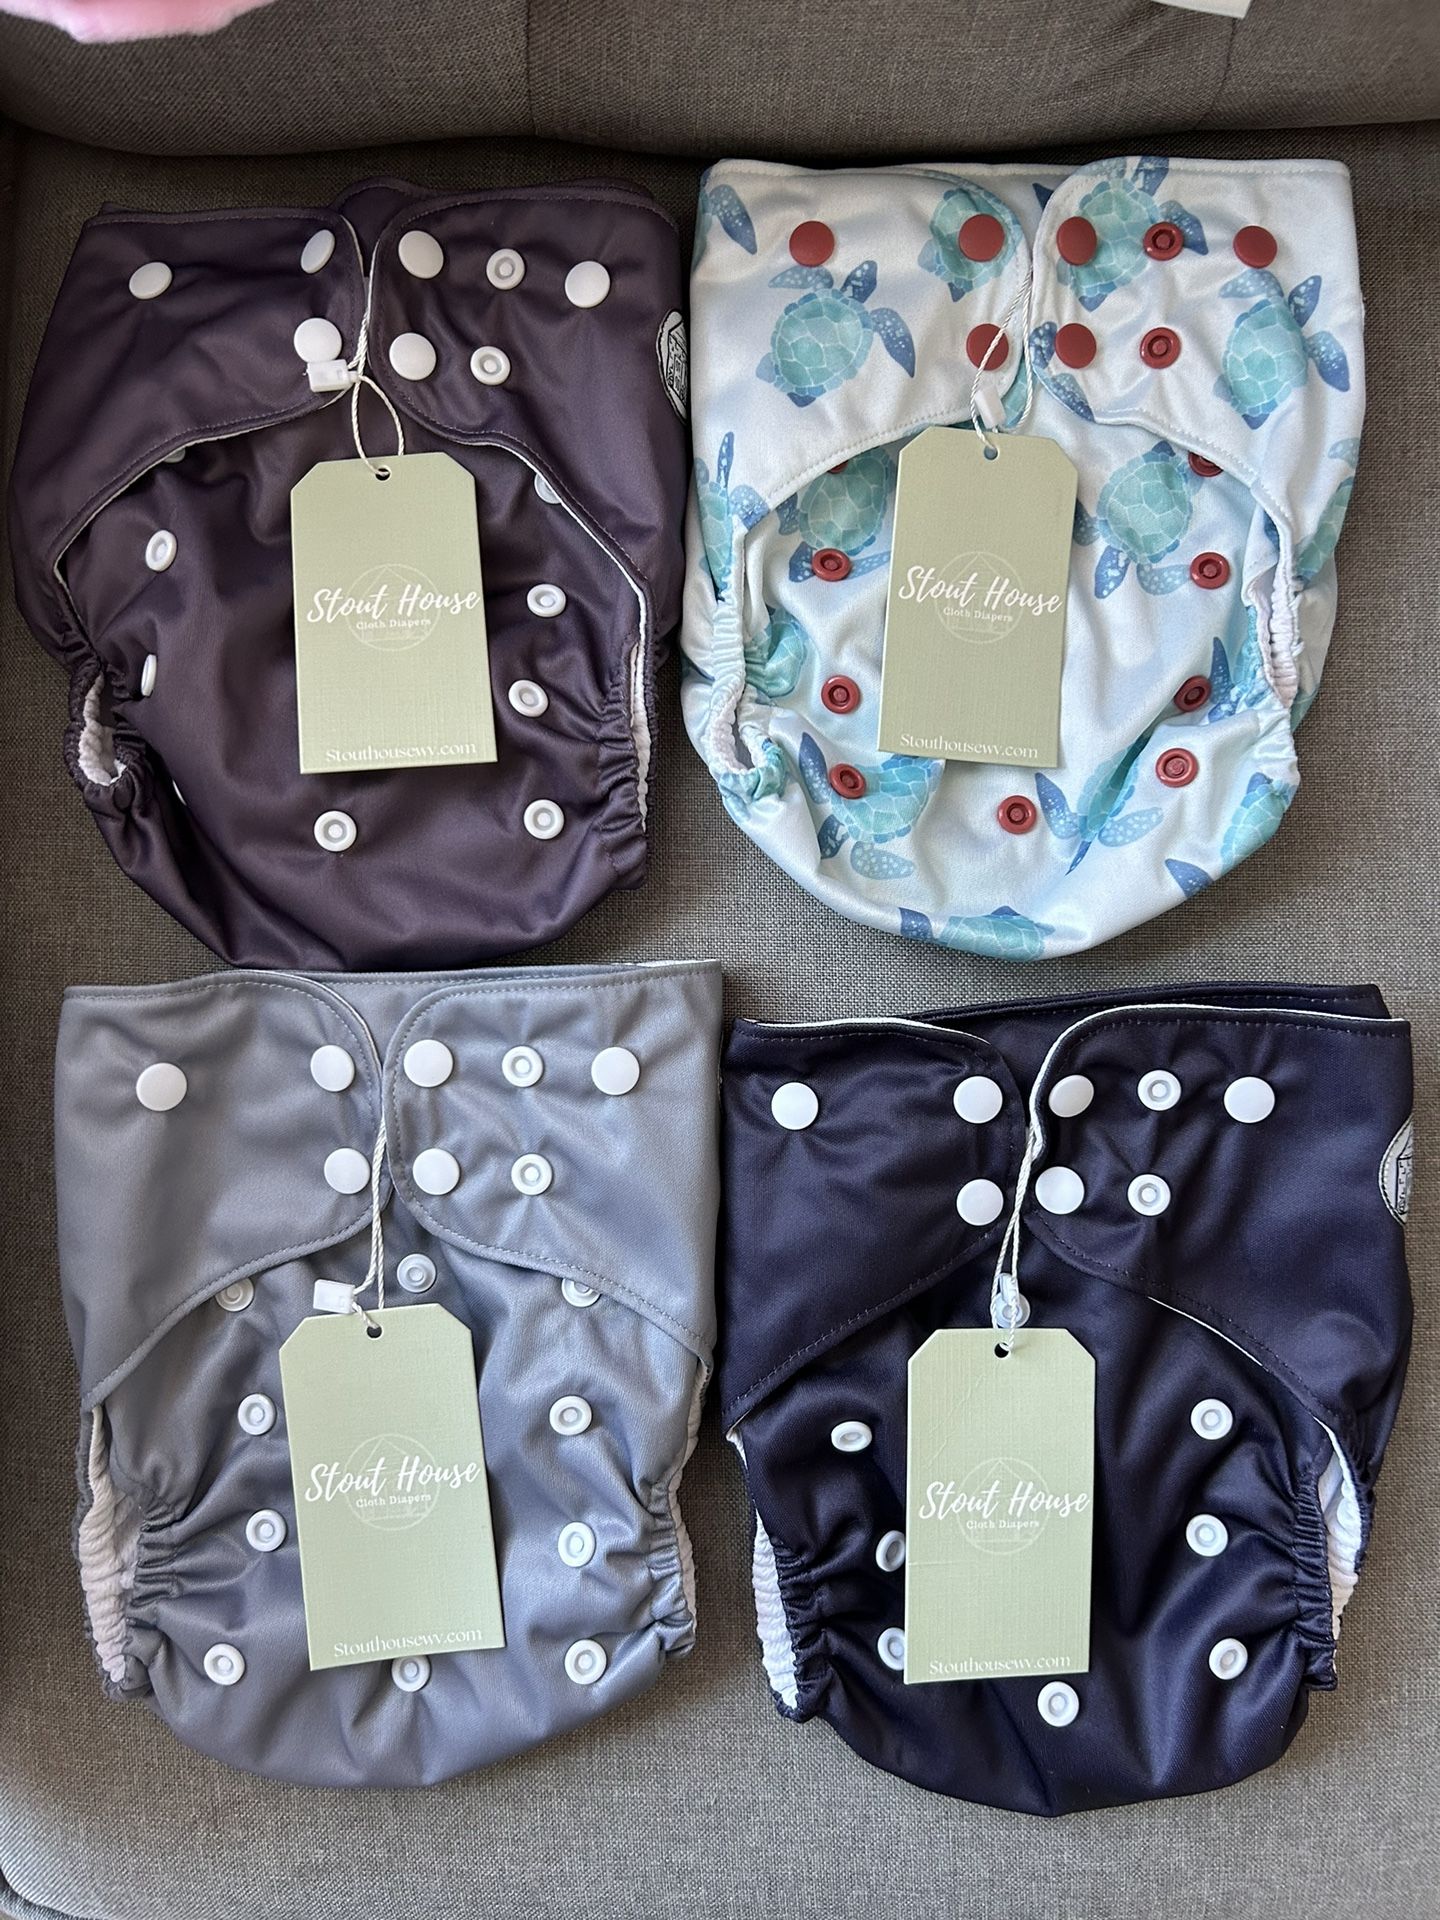 New Stouthouse OS Pocket Diapers 